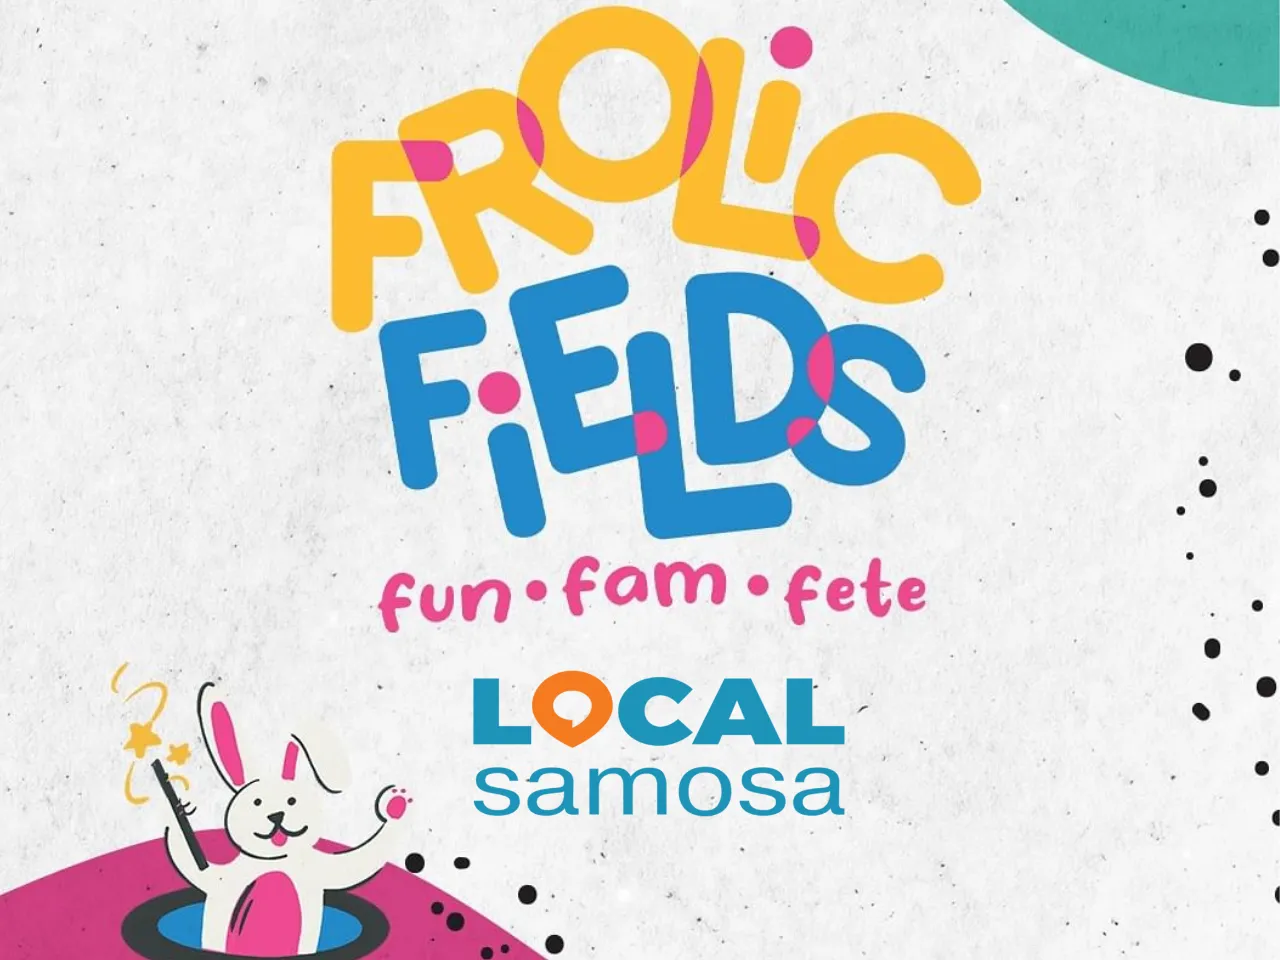 frolic fields fest x local samosa